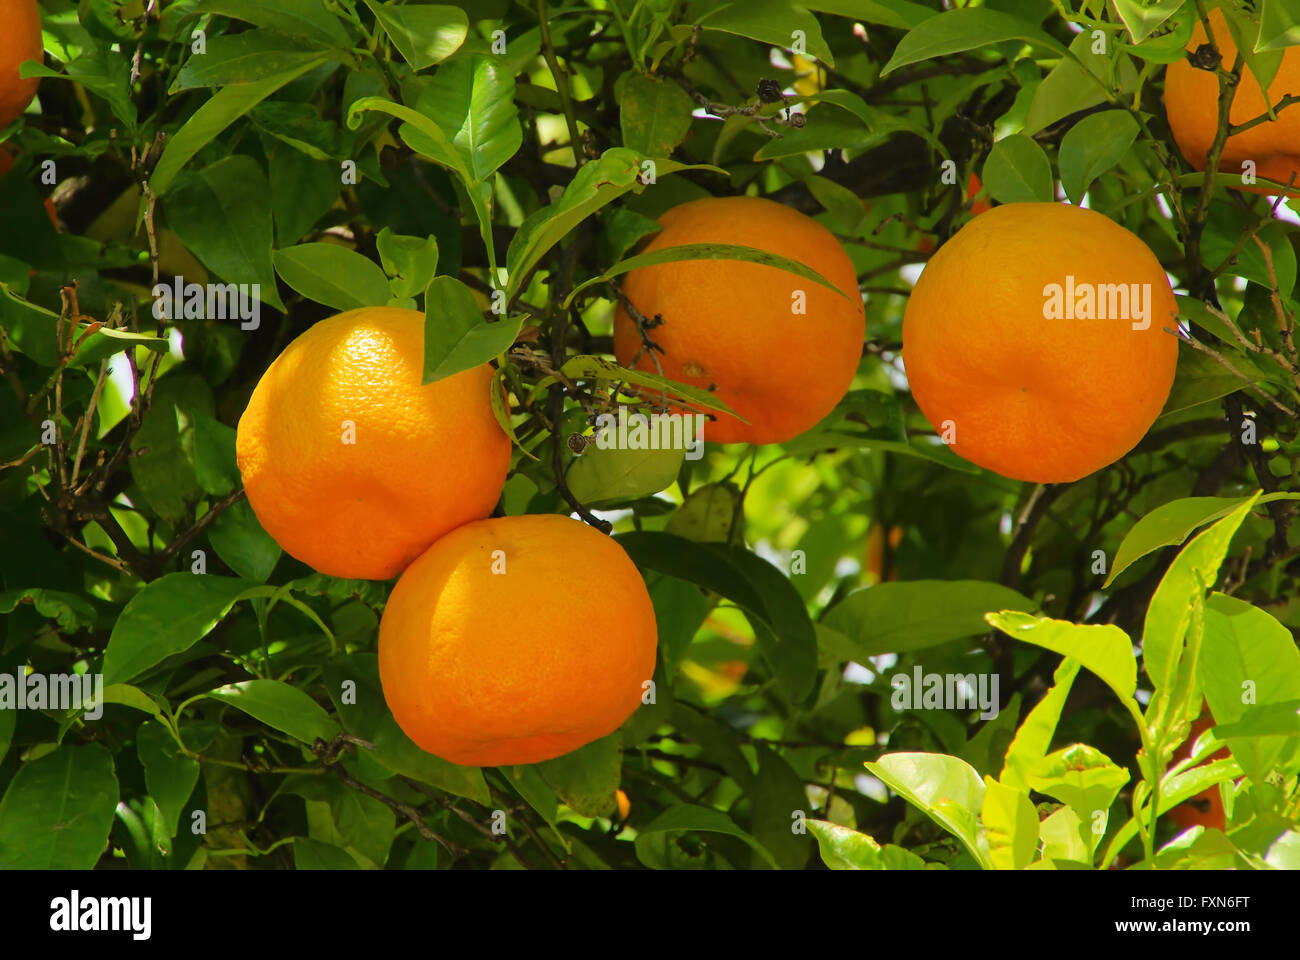 Orange am Baum - frutta di arancia su albero 07 Foto Stock